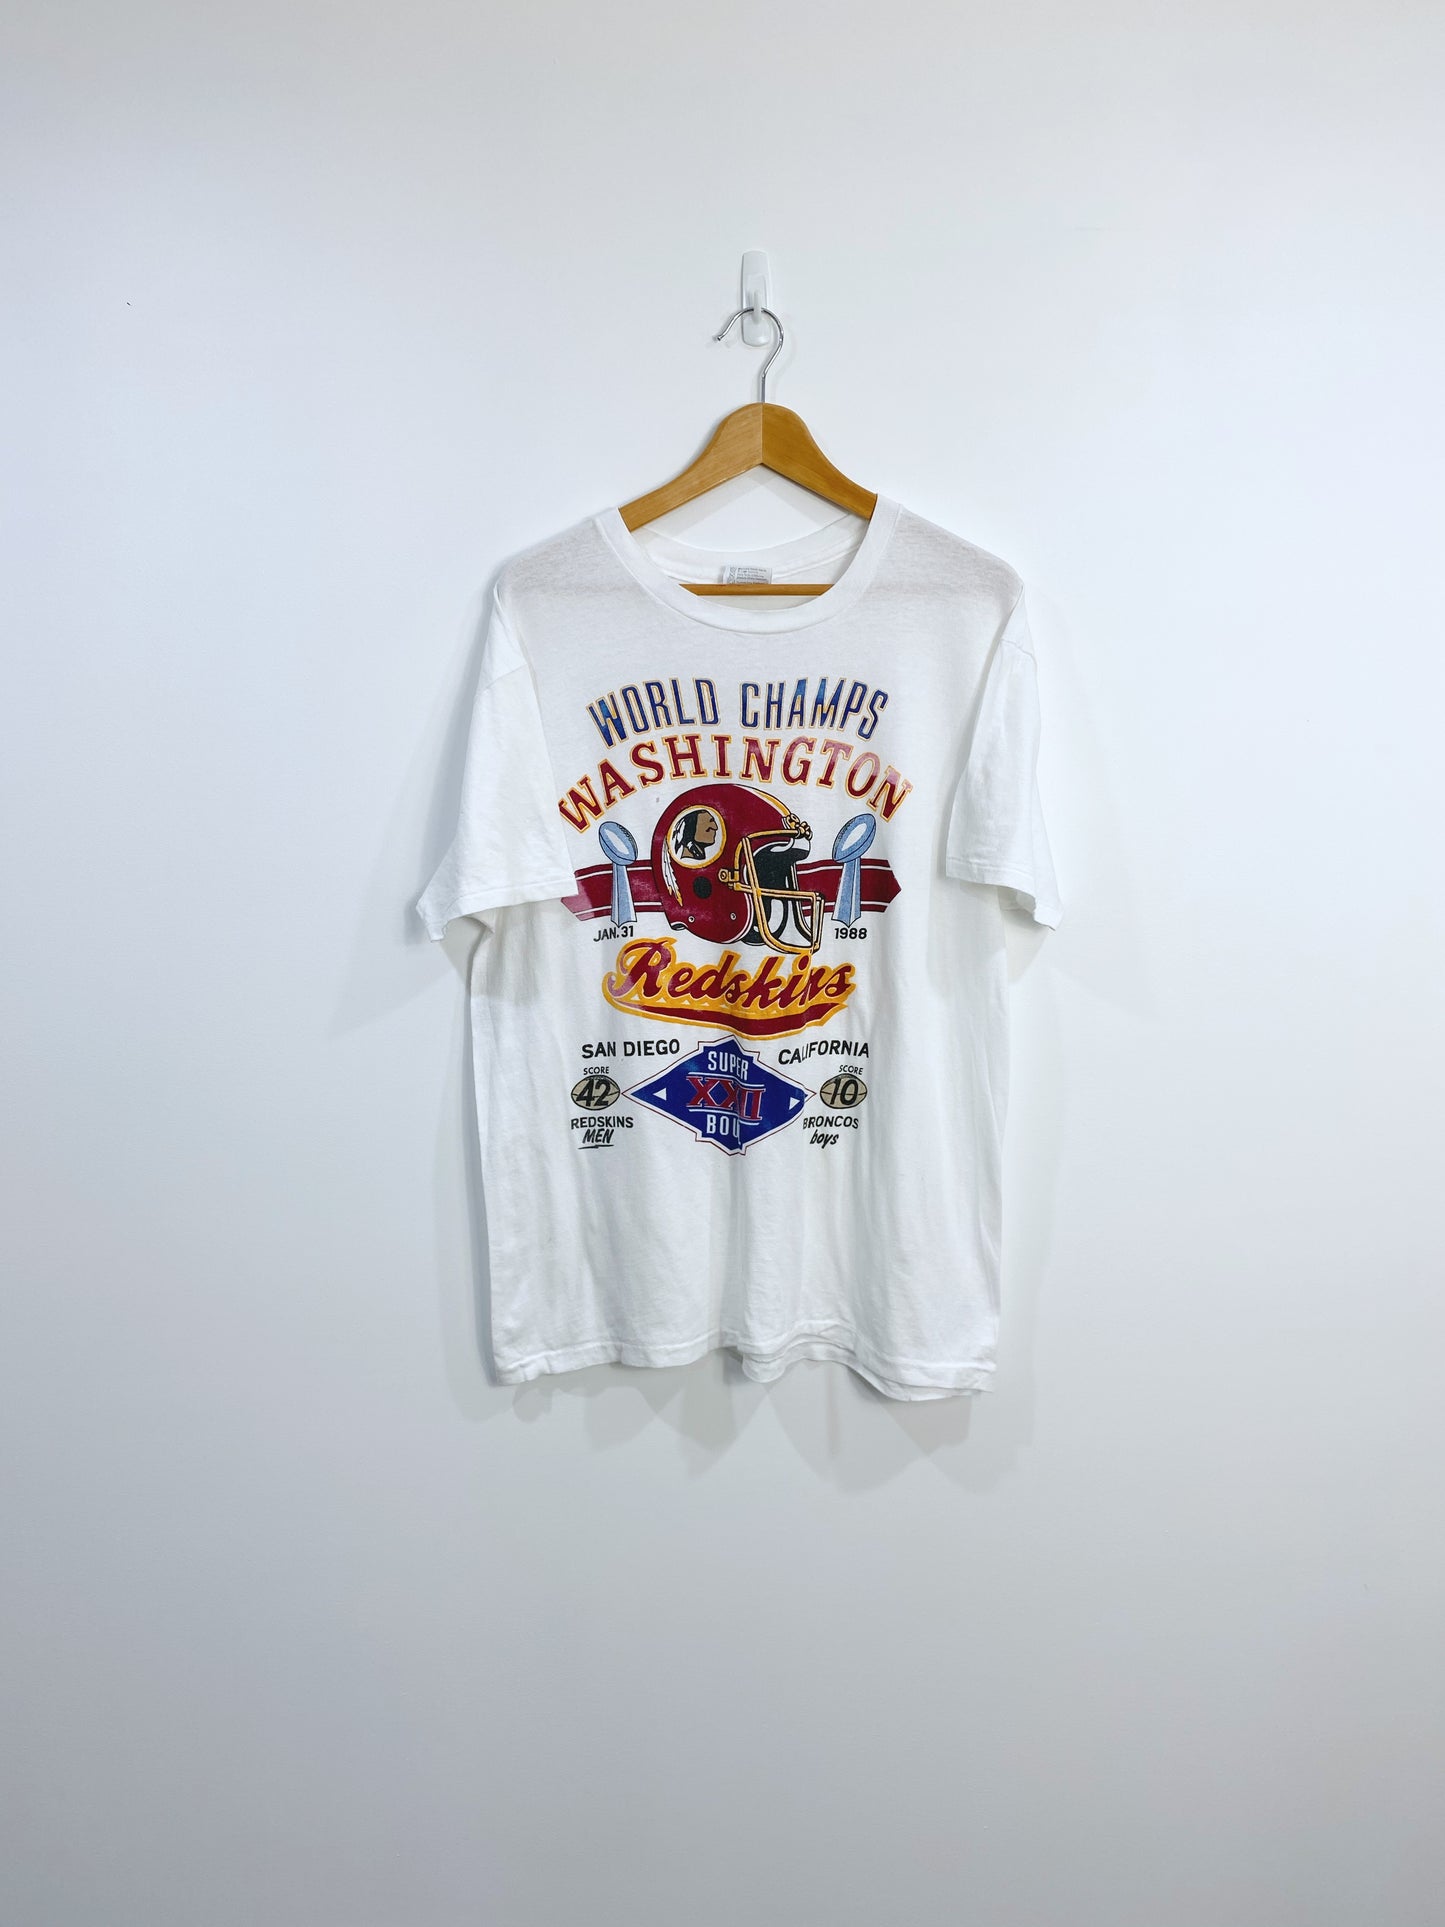 Vintage 1988 Washington Redskins Championship T-shirt L